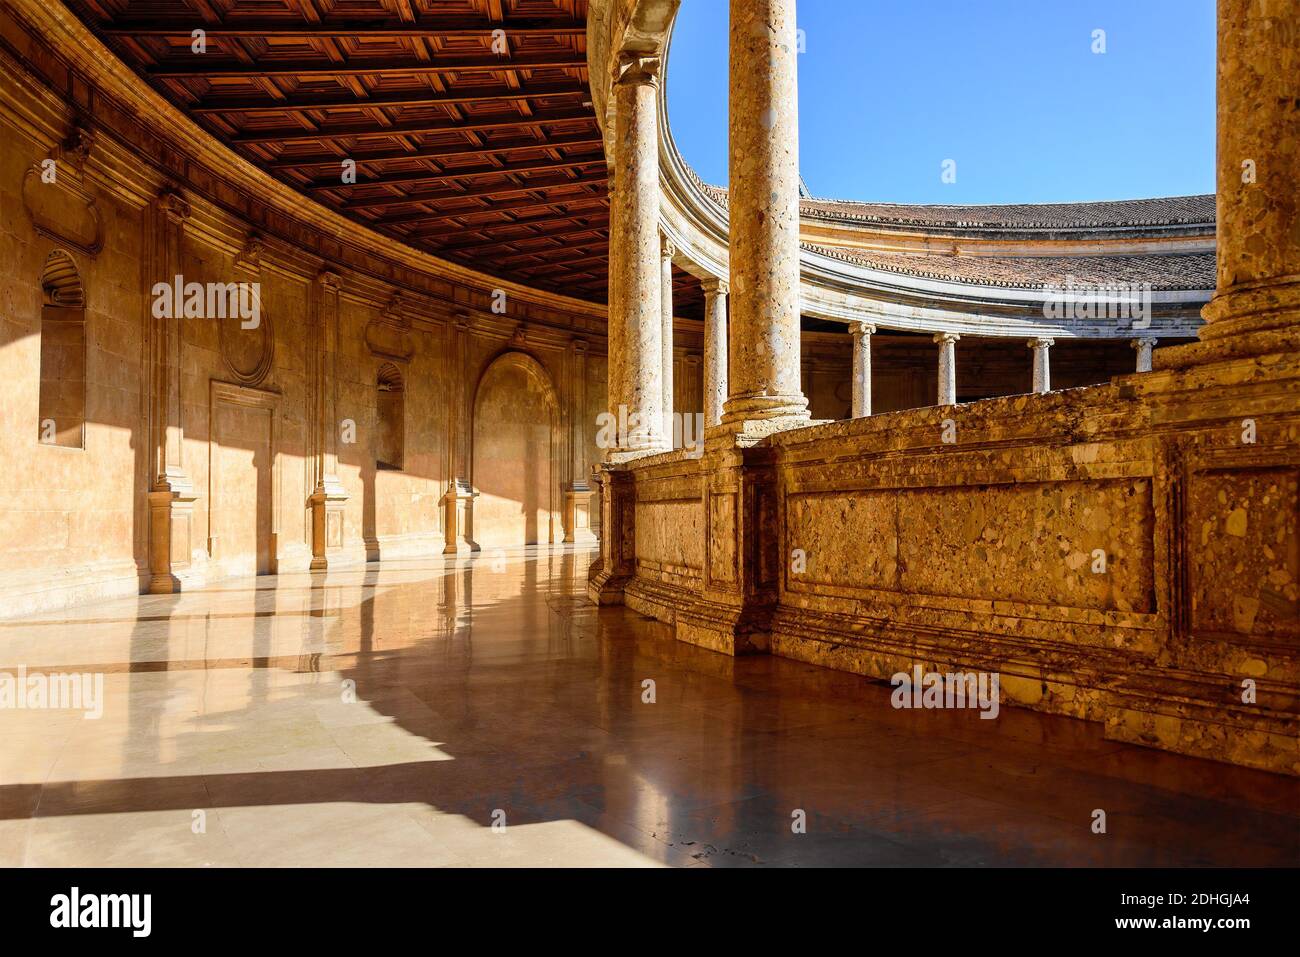 Granada, Spain - January 7, 2020: View of enclosed circular courtyard at the Palace of Charles V, a renaissance palace, at Alhambra complex. Stock Photo